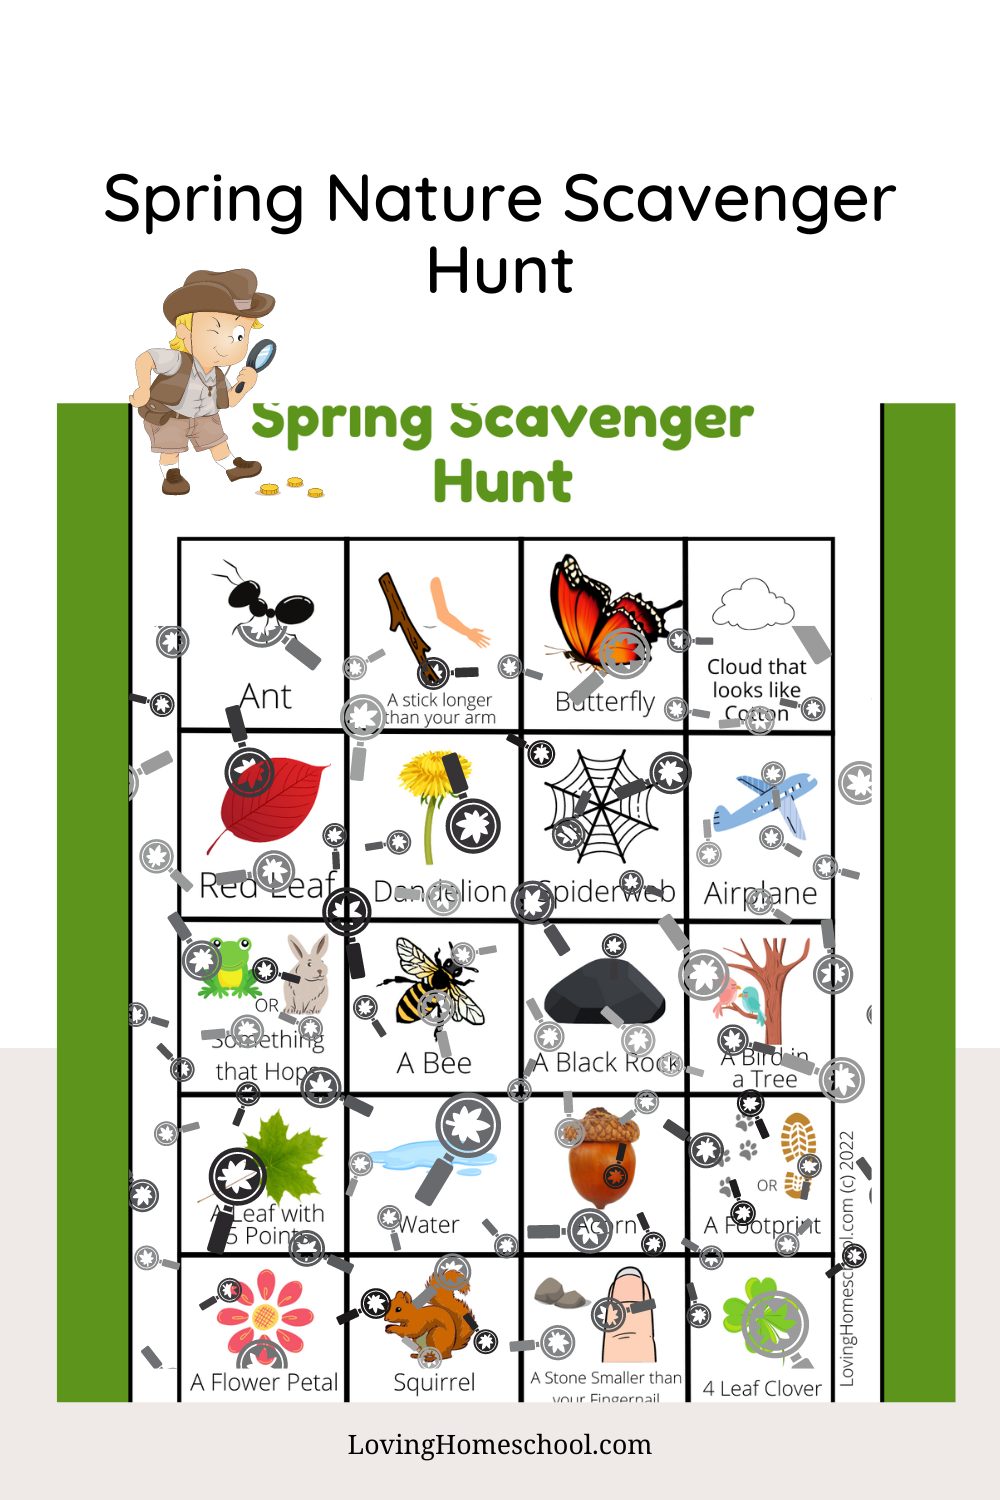 Spring Nature Scavenger Hunt Pinterest Pin